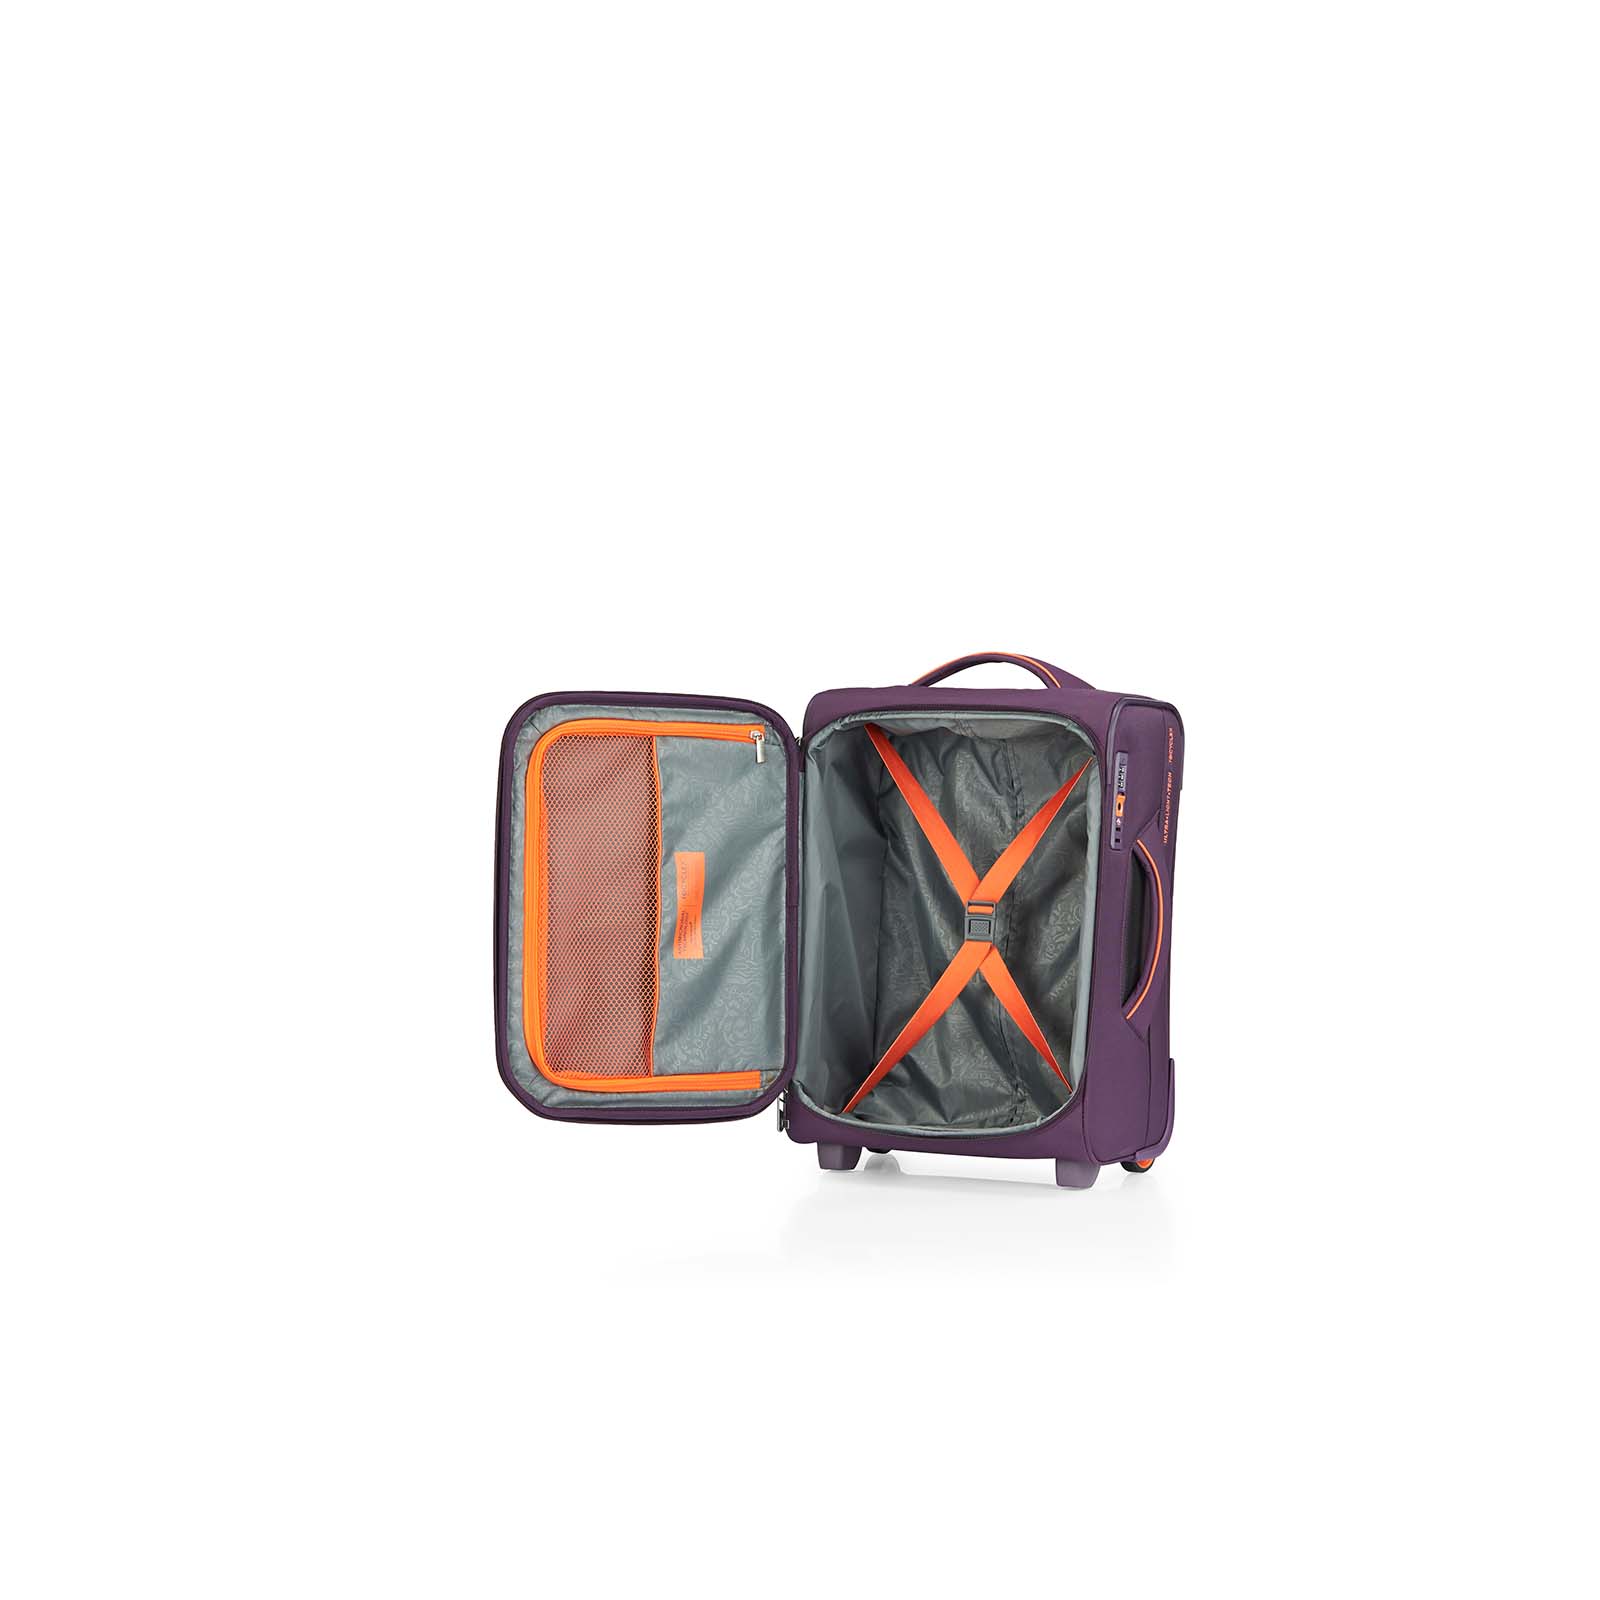 American-Tourister-Applite-4-Eco-50cm-Carry-On-Suitcase-Purple-Orange-Open